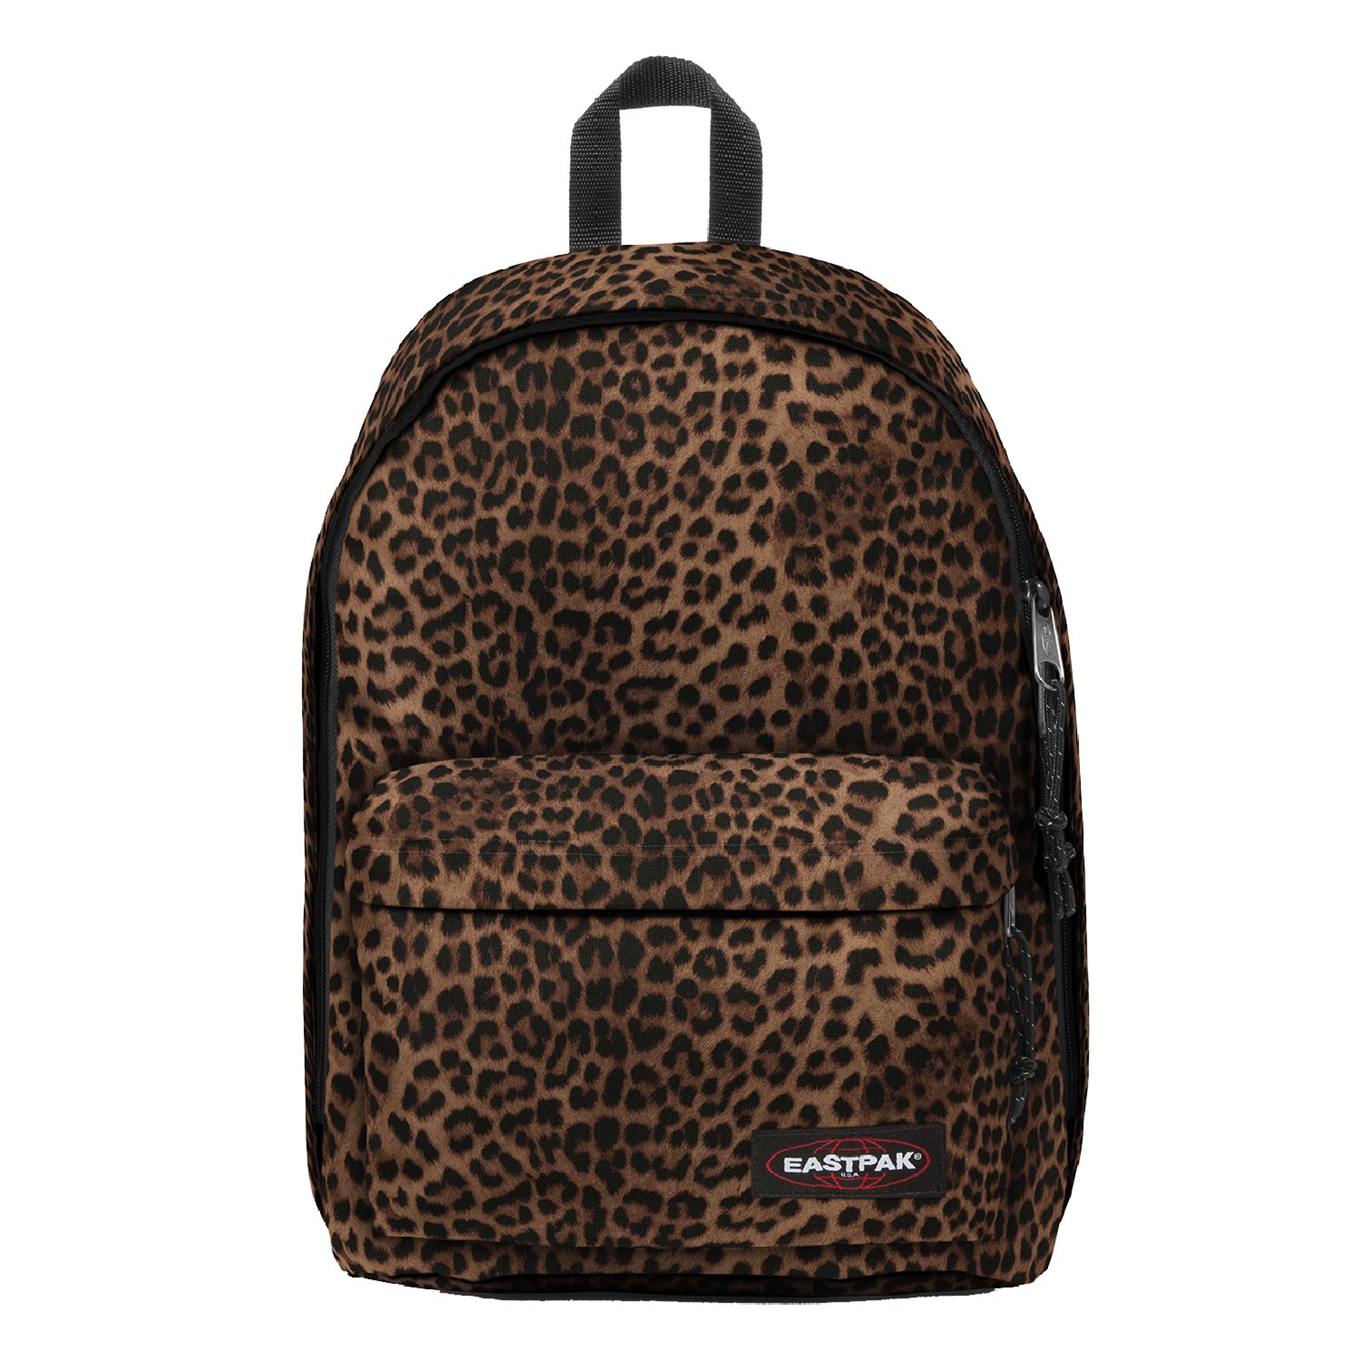 Eastpak Out Of Office safari original backpack